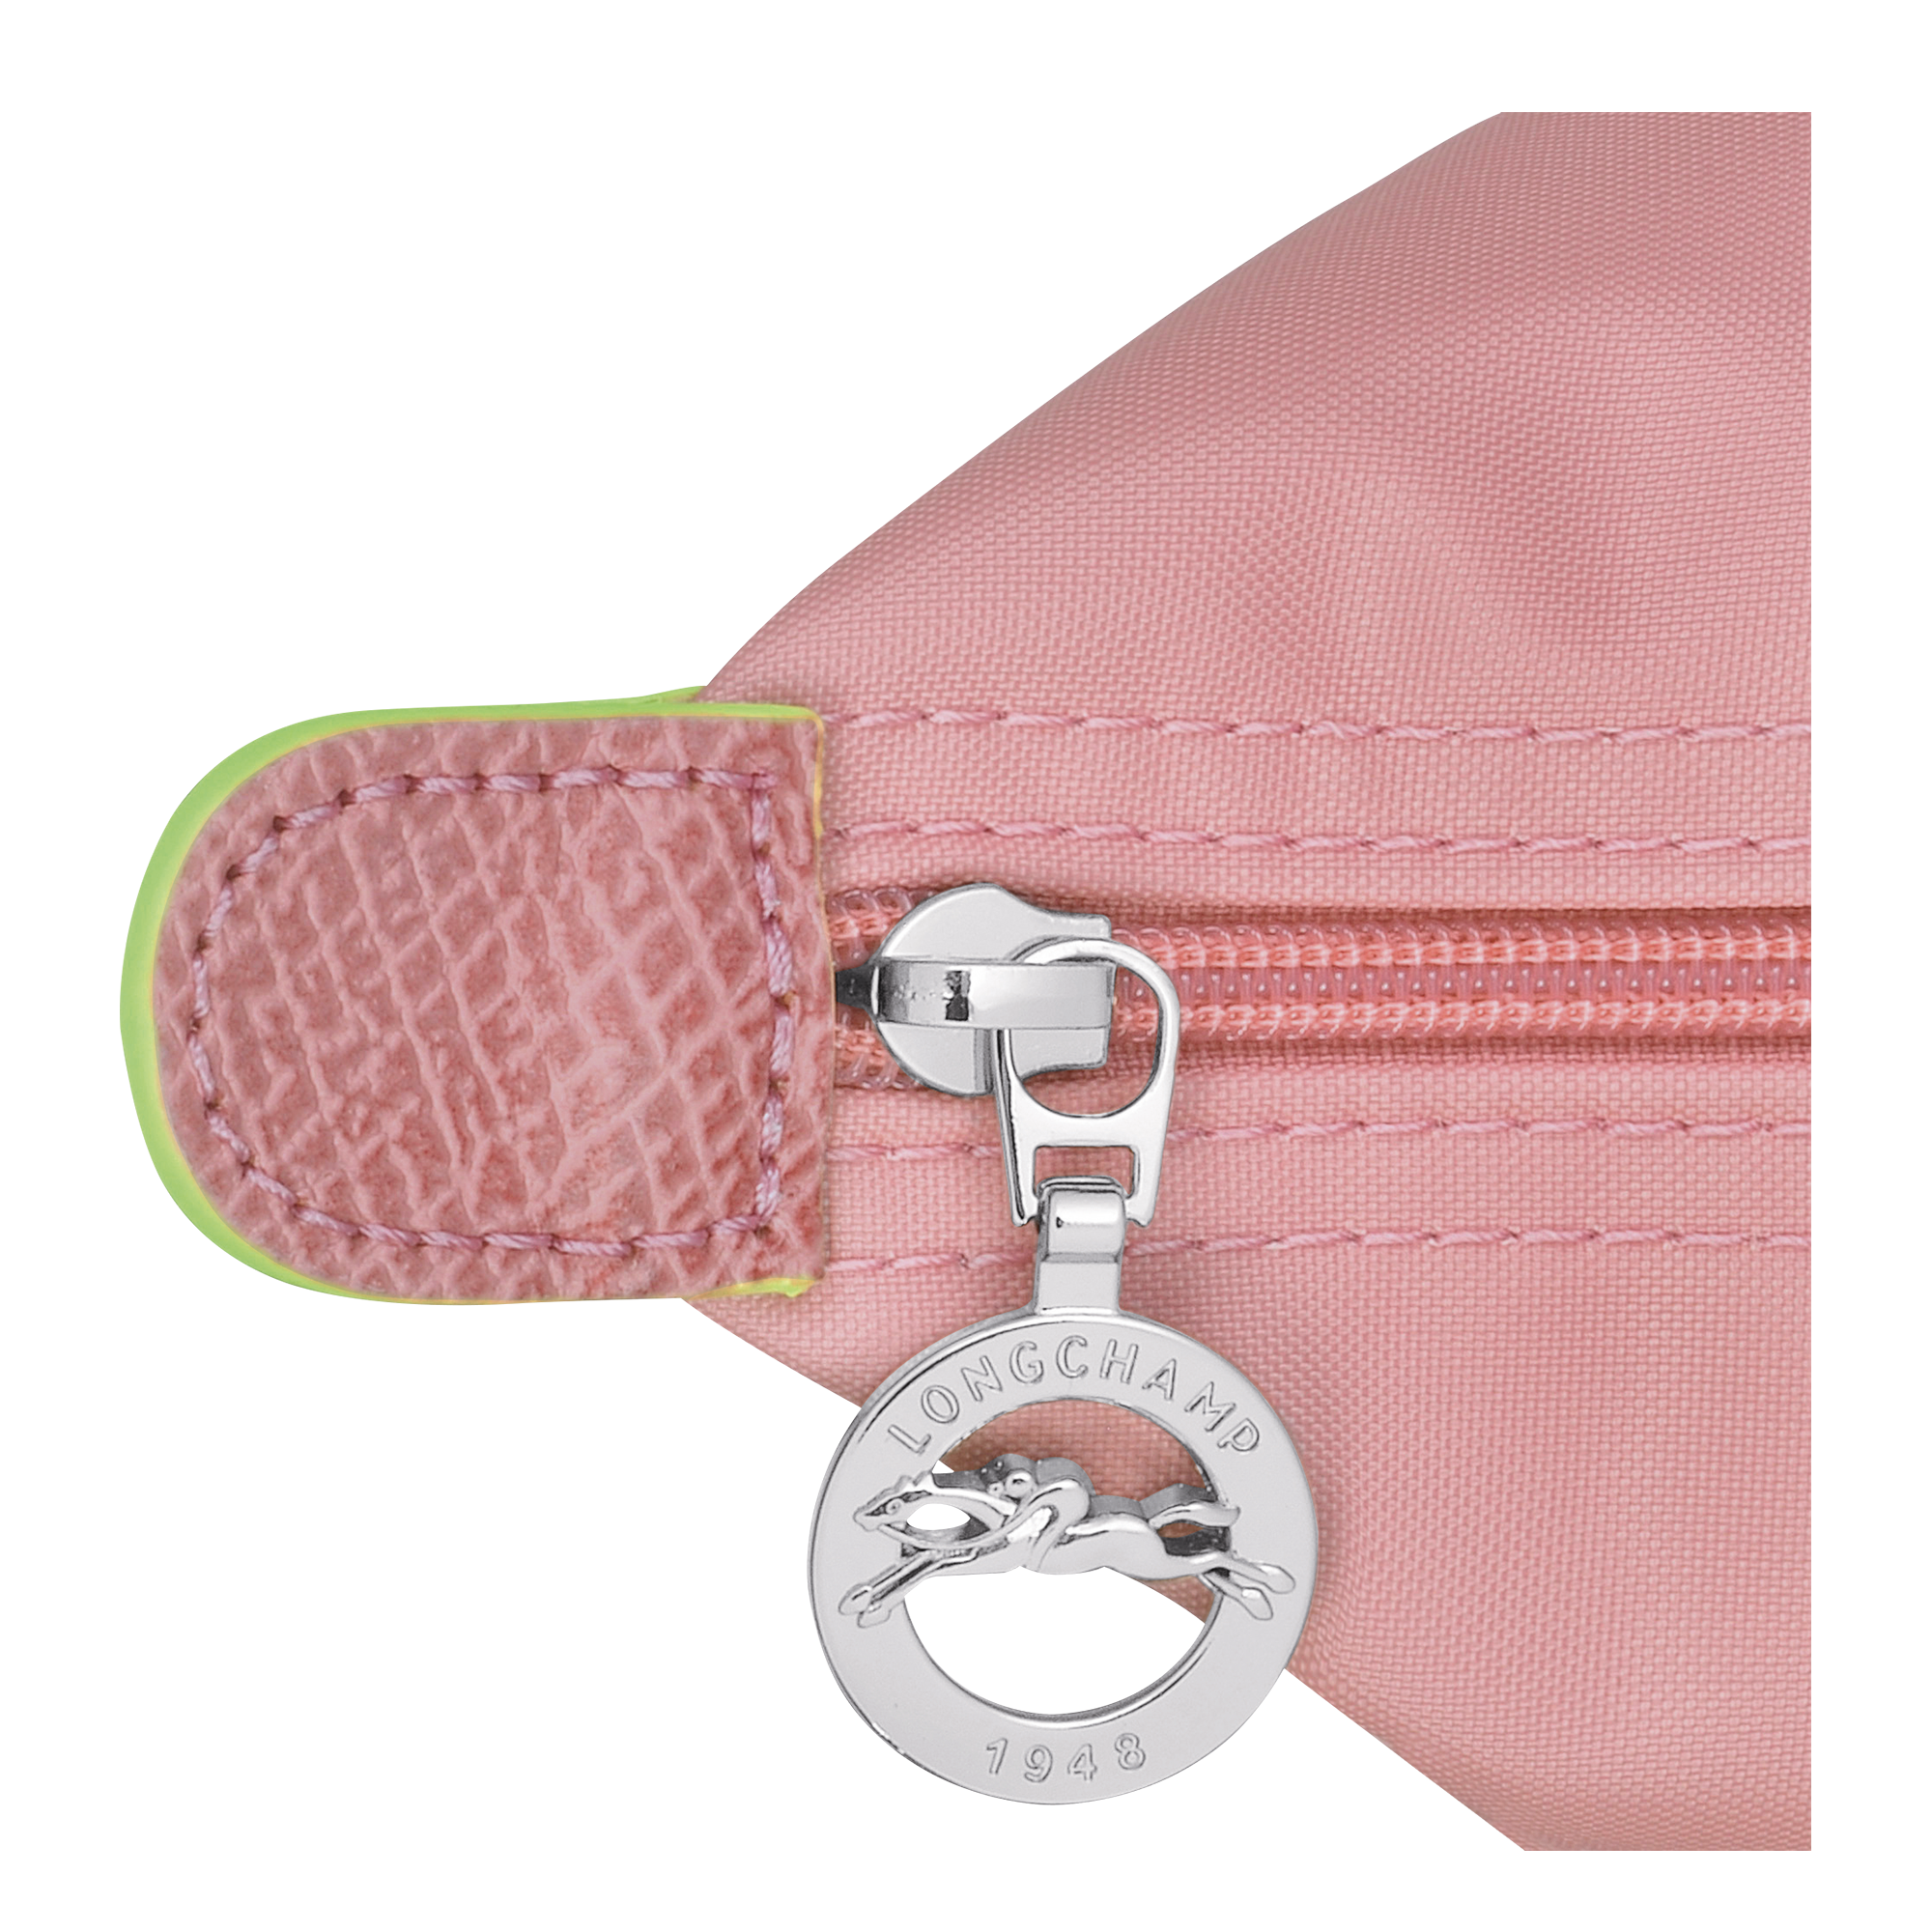 Le Pliage Green 肩揹袋 L, 玫瑰粉色